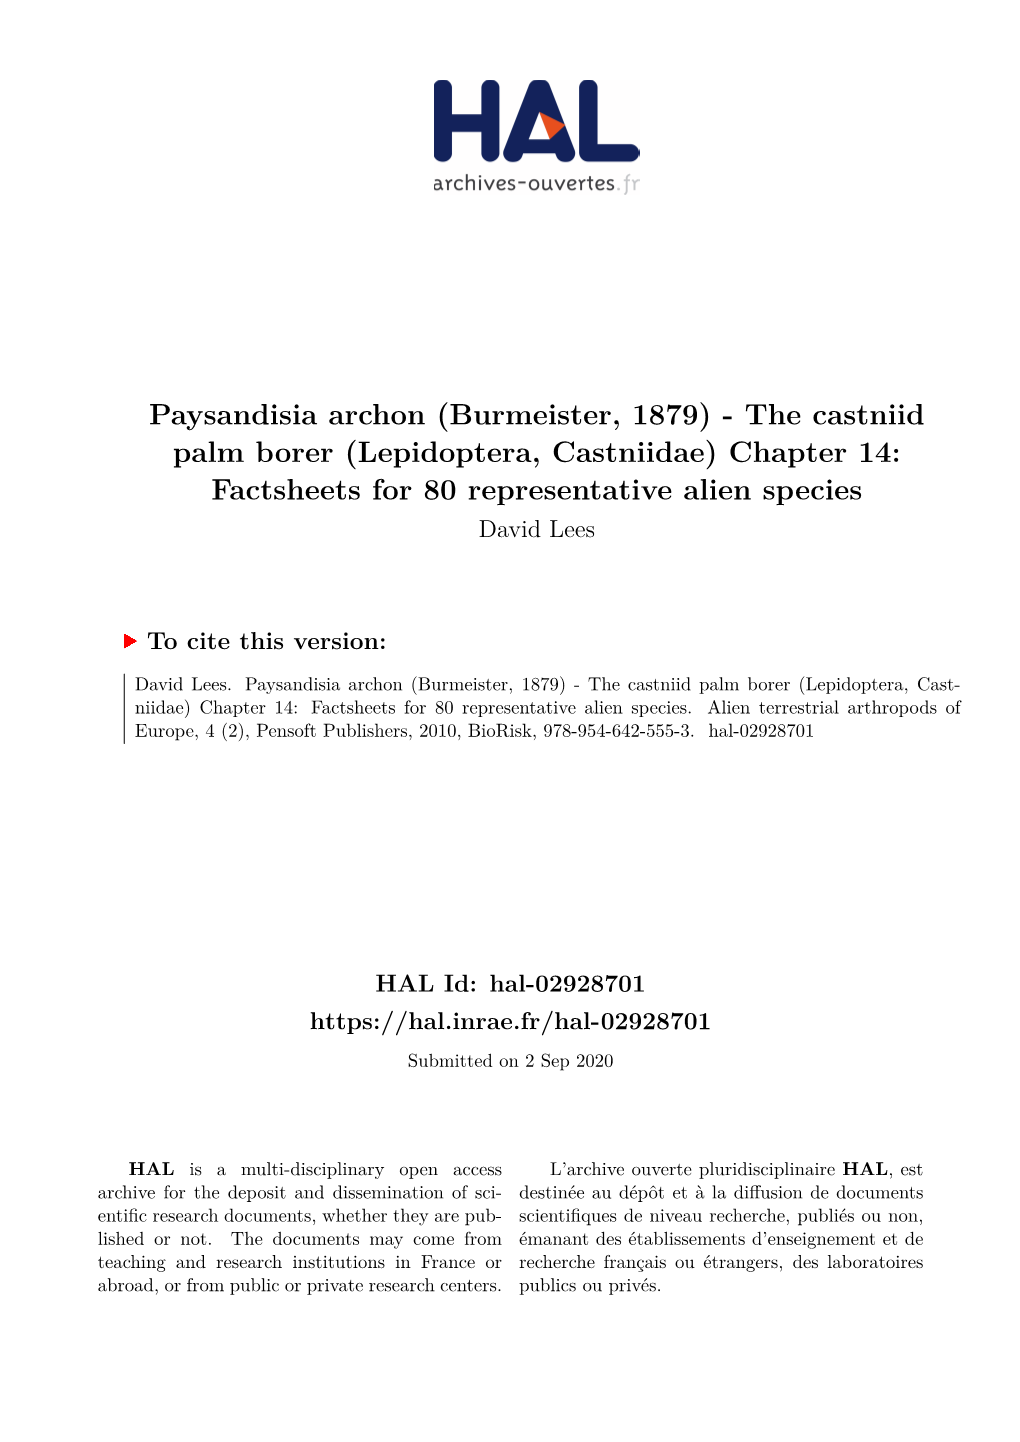 Paysandisia Archon (Burmeister, 1879) - the Castniid Palm Borer (Lepidoptera, Castniidae) Chapter 14: Factsheets for 80 Representative Alien Species David Lees